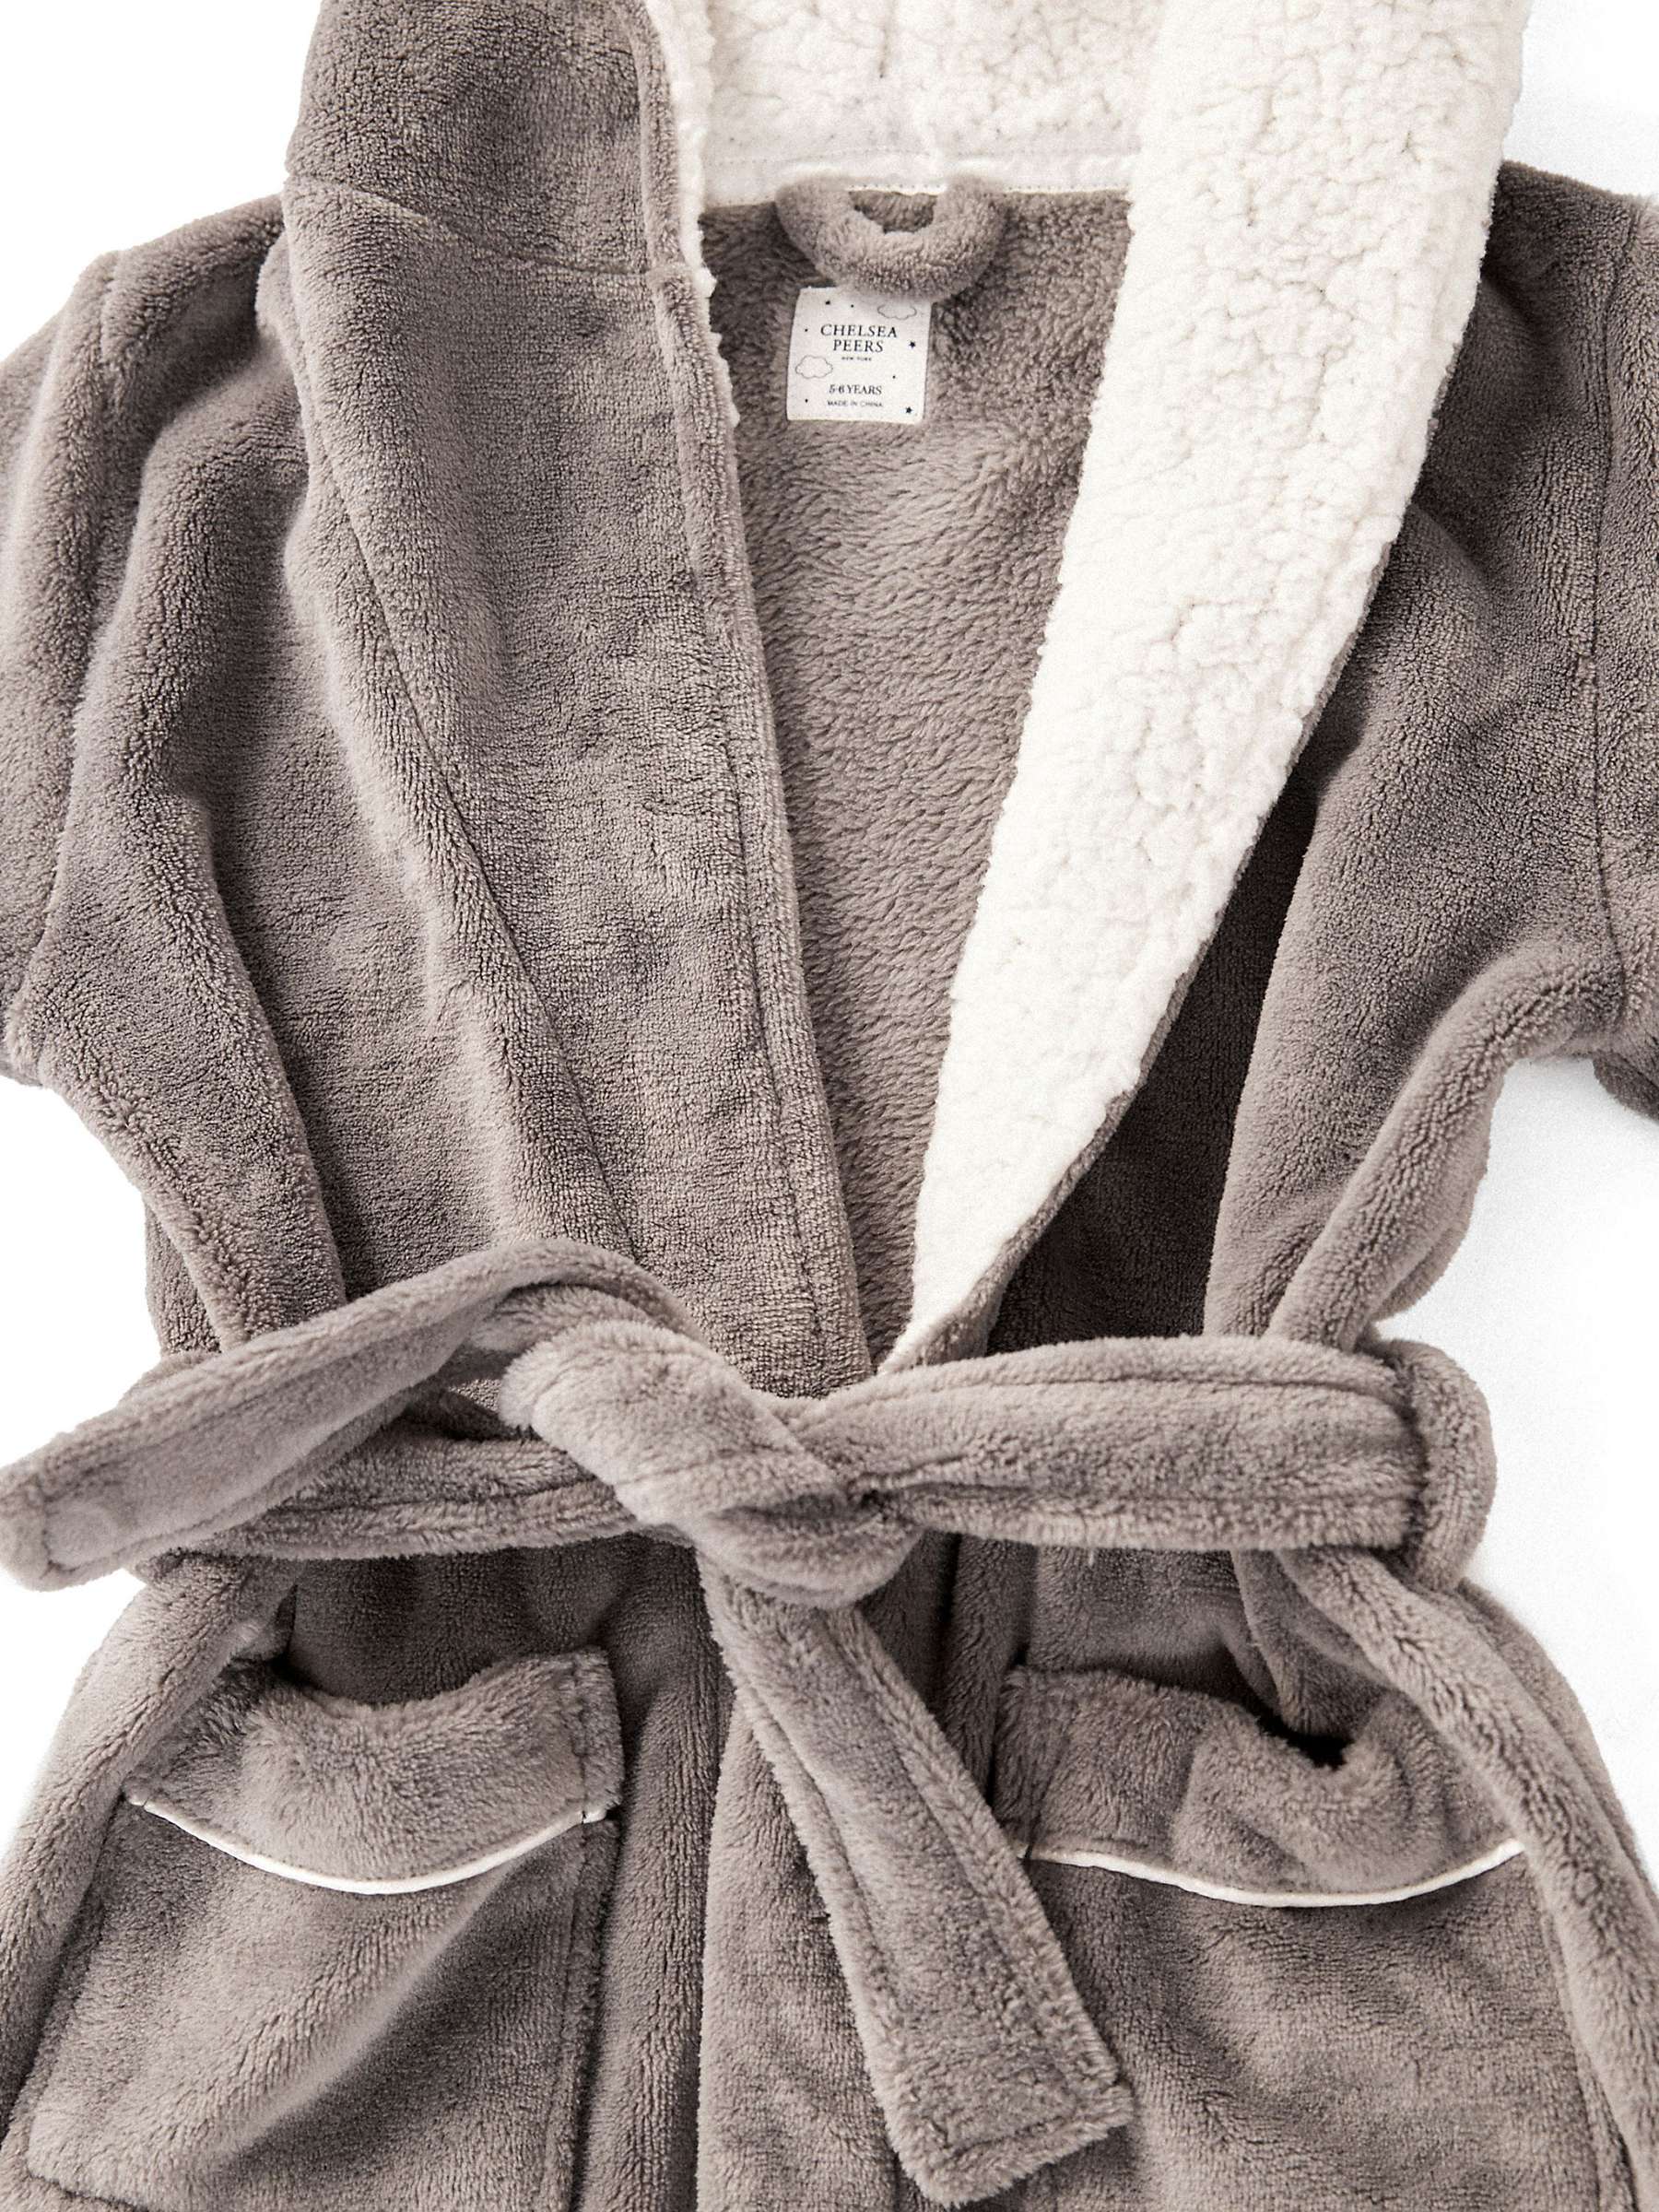 Buy Chelsea Peers Kids' Fluffy Hooded Dressing Gown Online at johnlewis.com